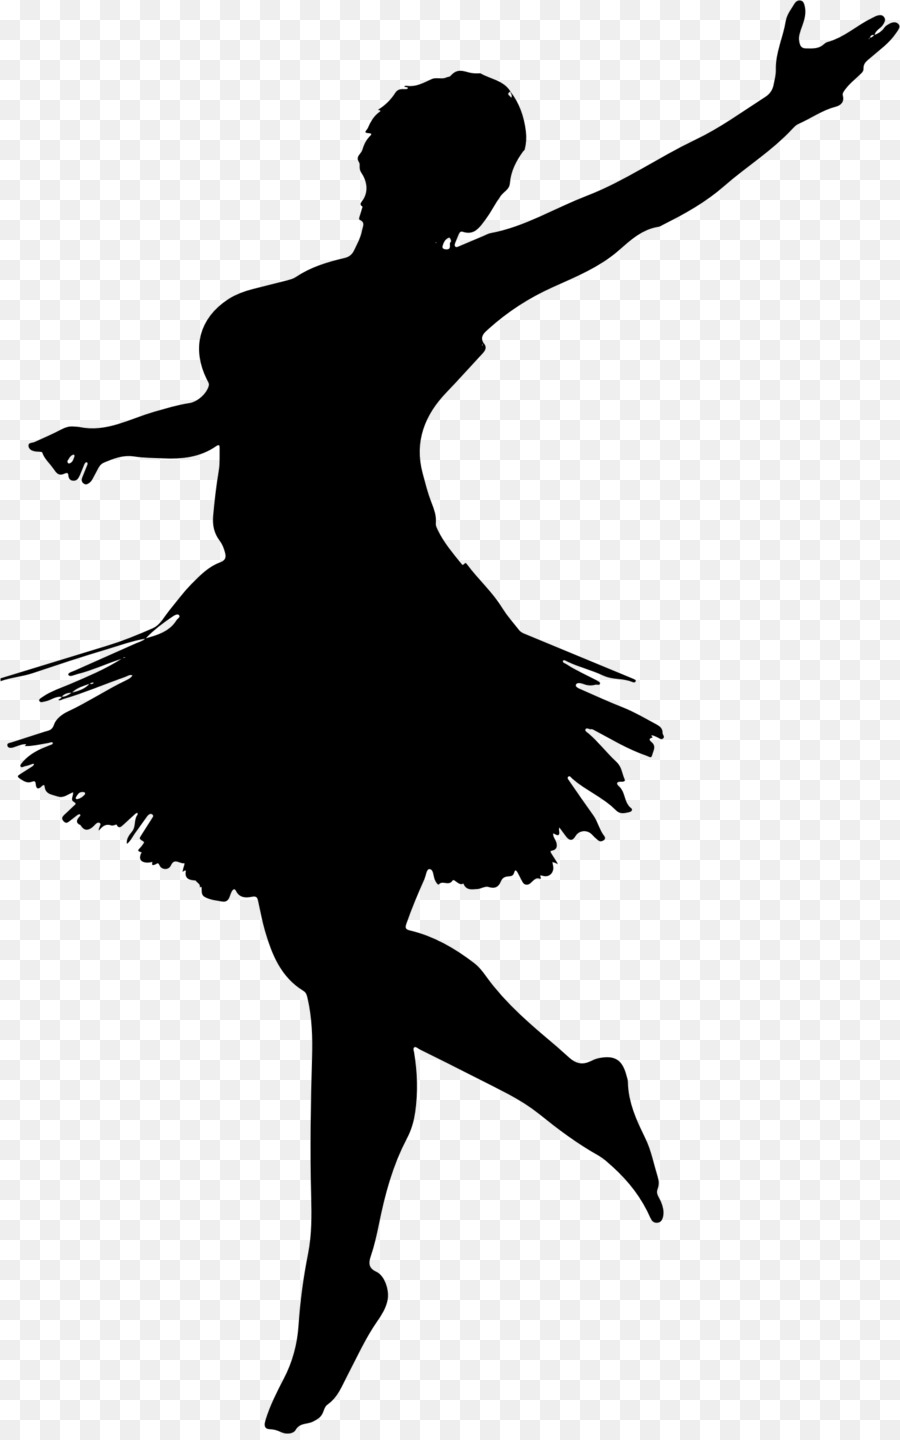 Ballet Dancer Silhouette - Dancers png download - 1460*2326 - Free Transparent Ballet Dancer png Download.